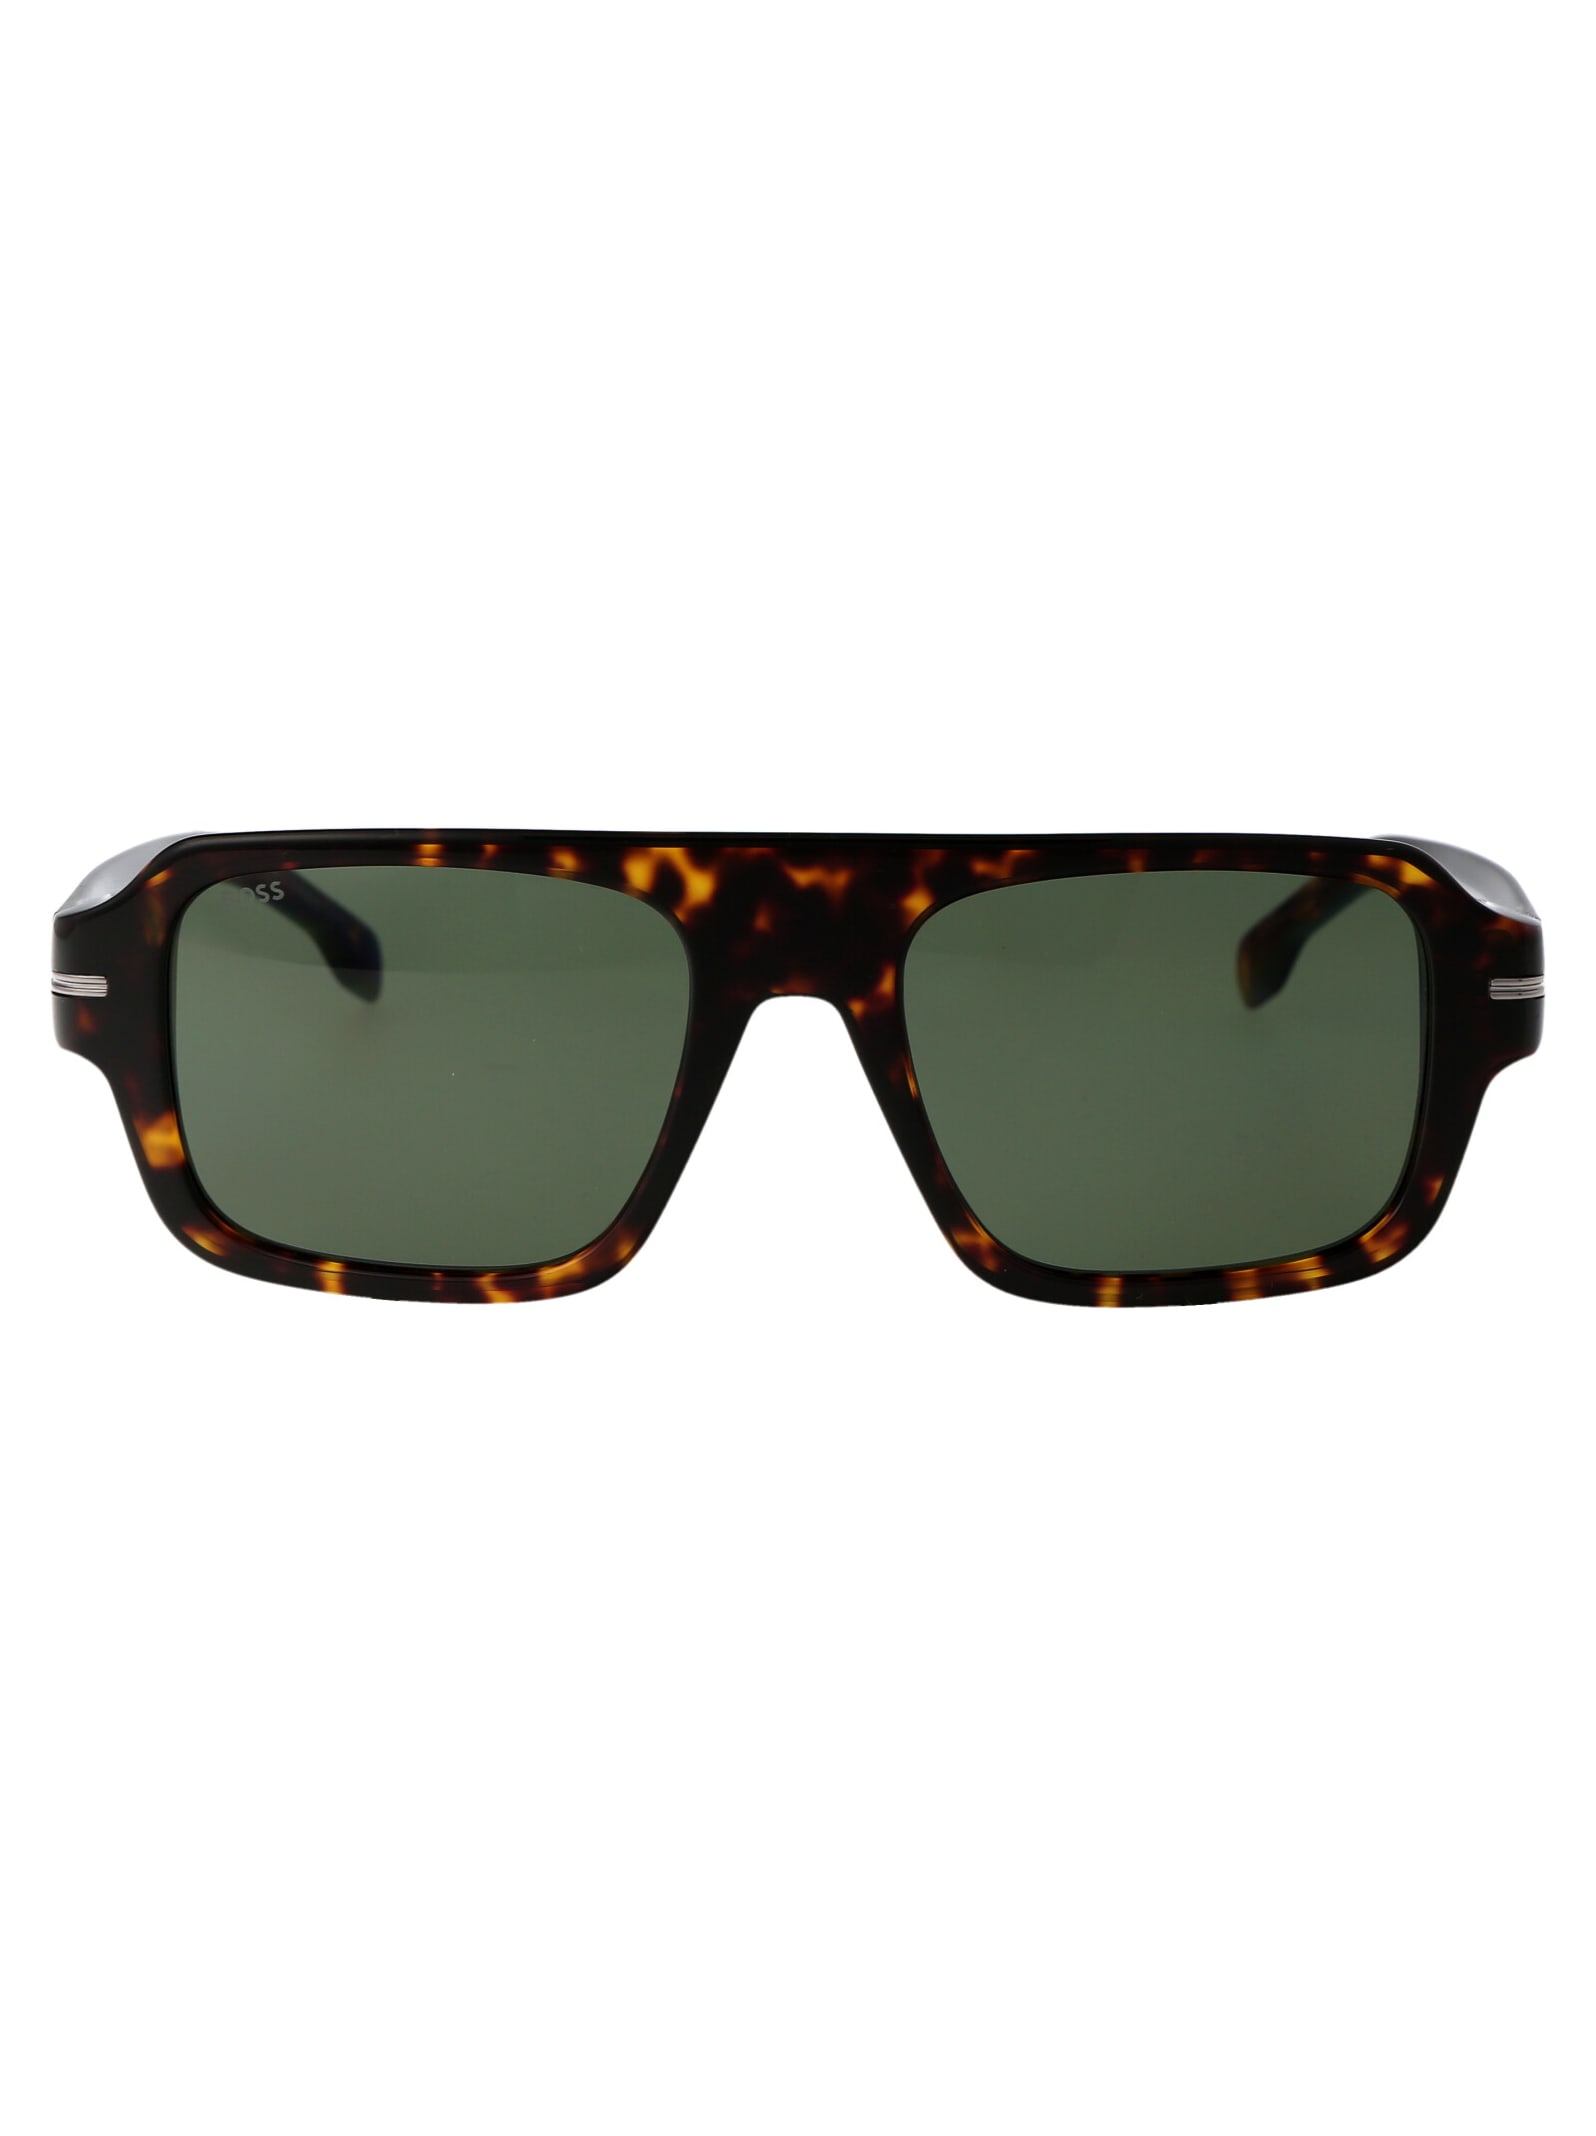 Boss 1595/s Sunglasses